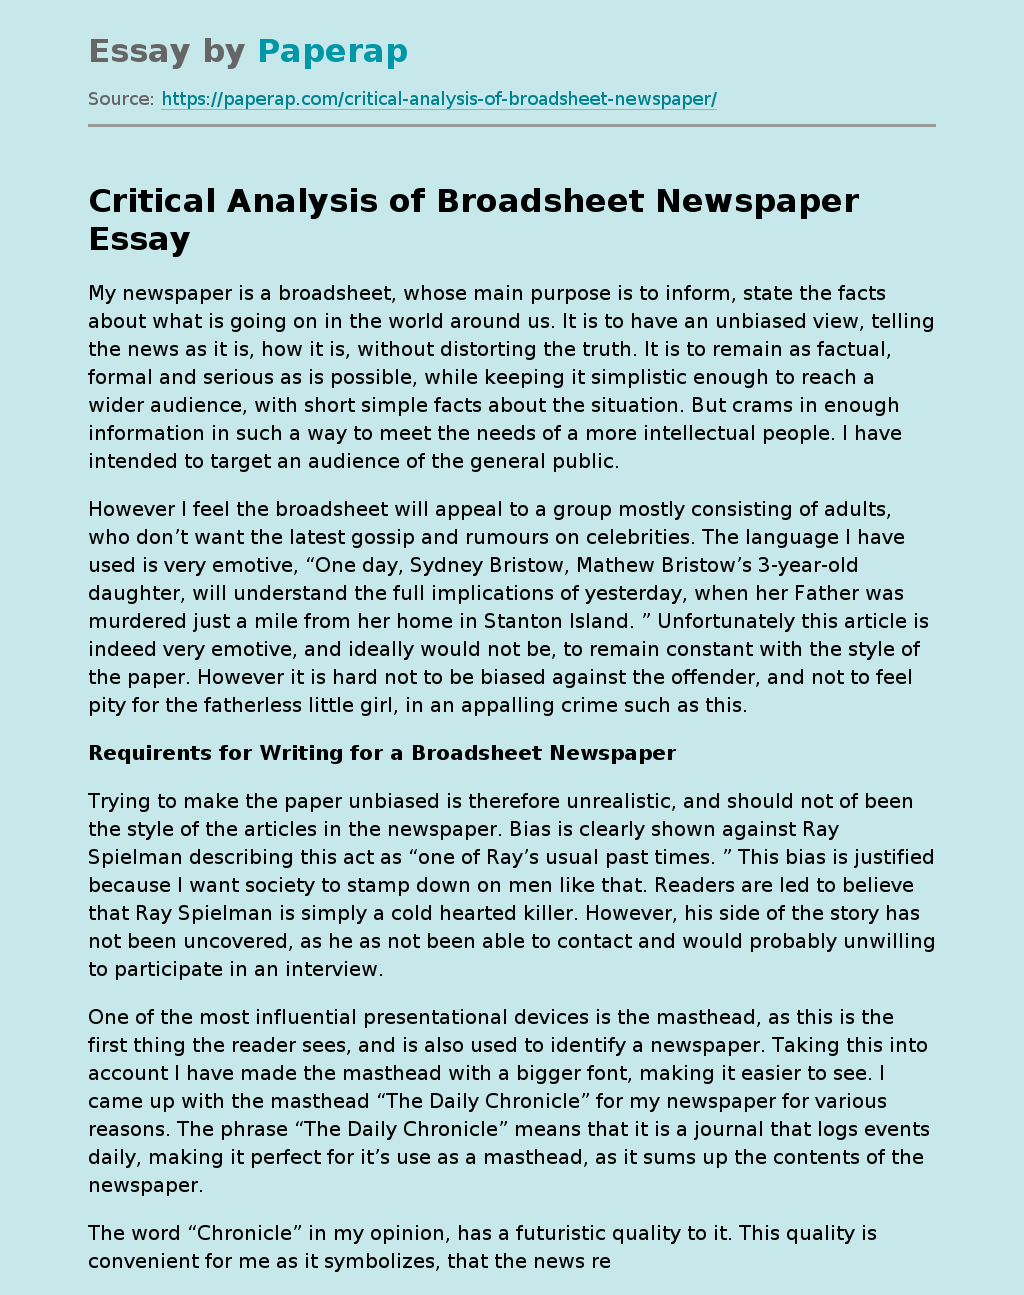 Critical Analysis of Broadsheet Newspaper